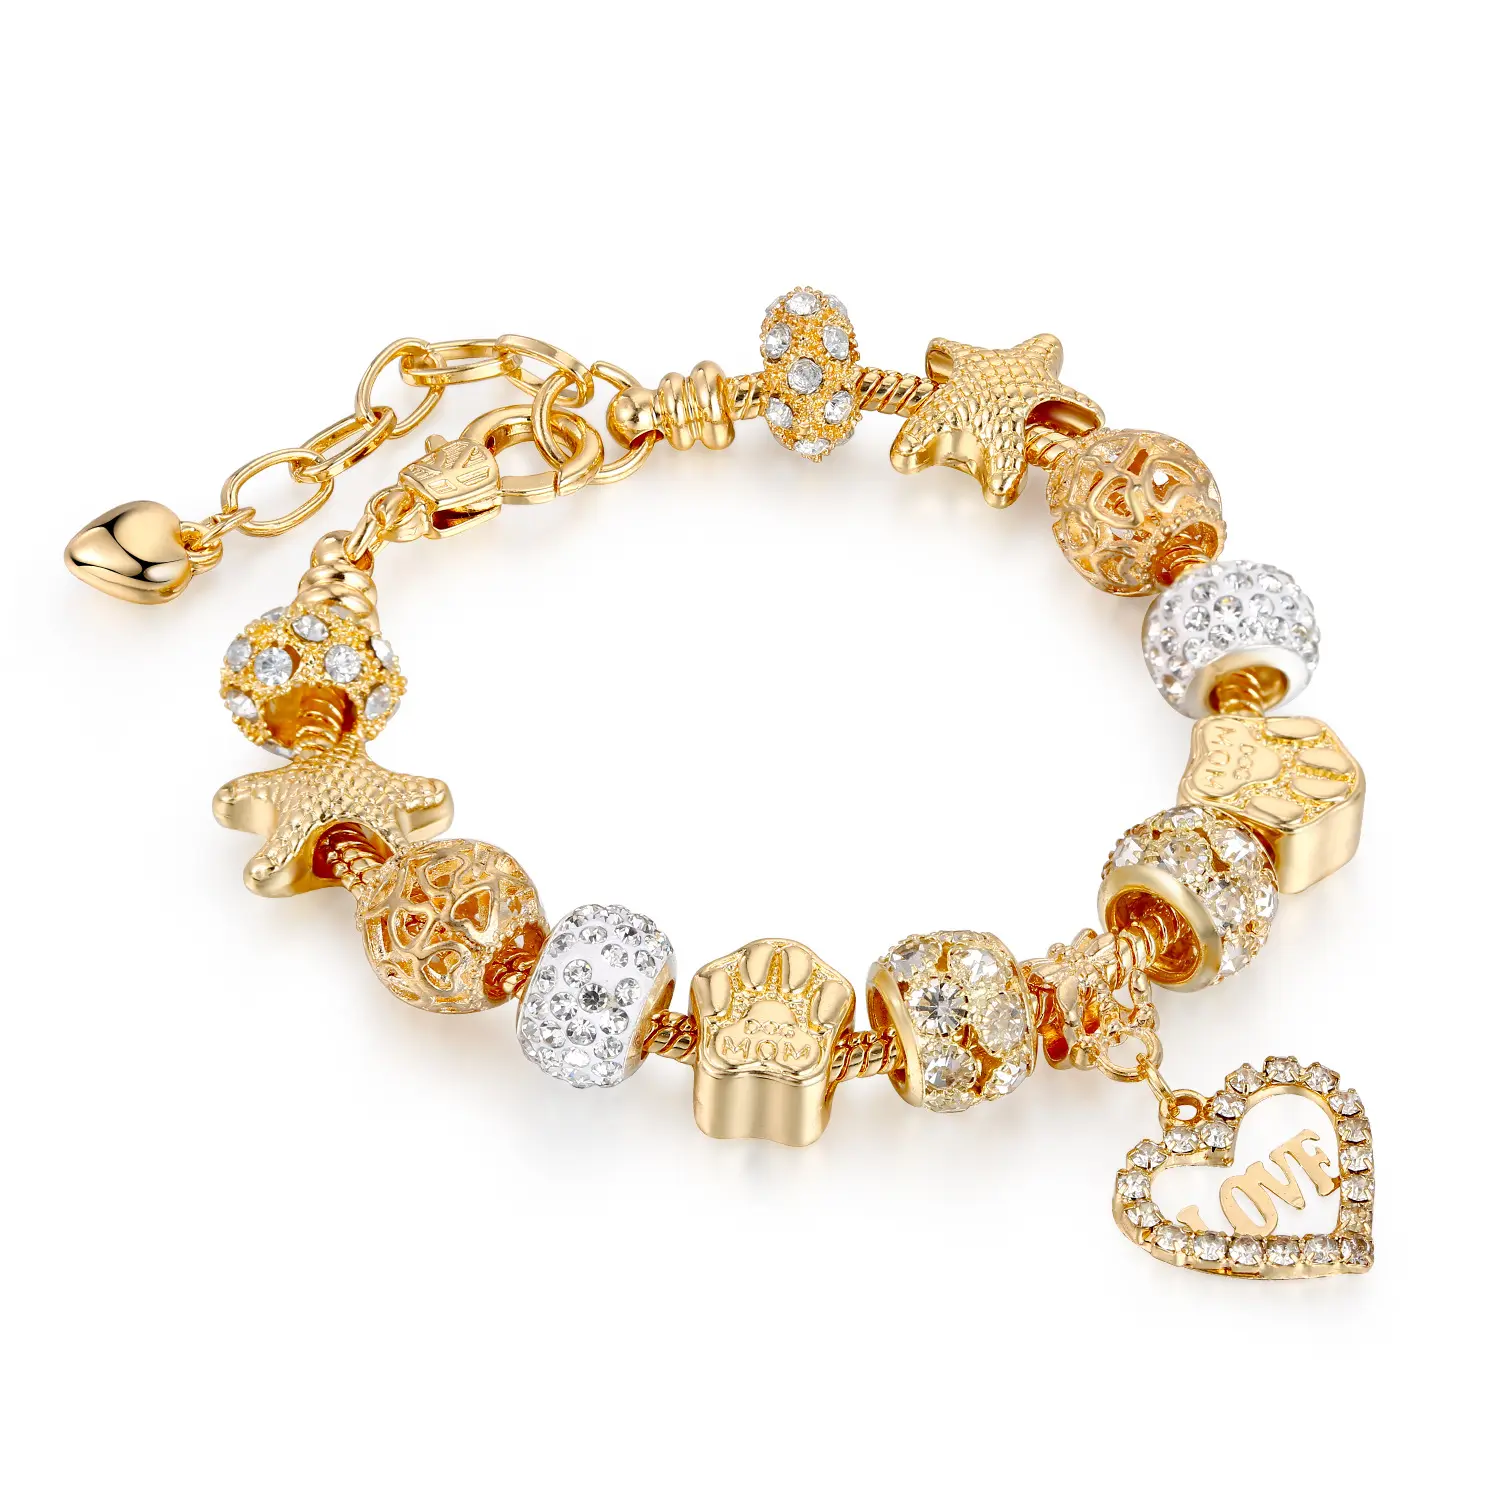 Schmuck Fabrik Preis Murano Glasperlen Gold Anhänger Armband Mit Kristall Herz Anhänger Charm Armband